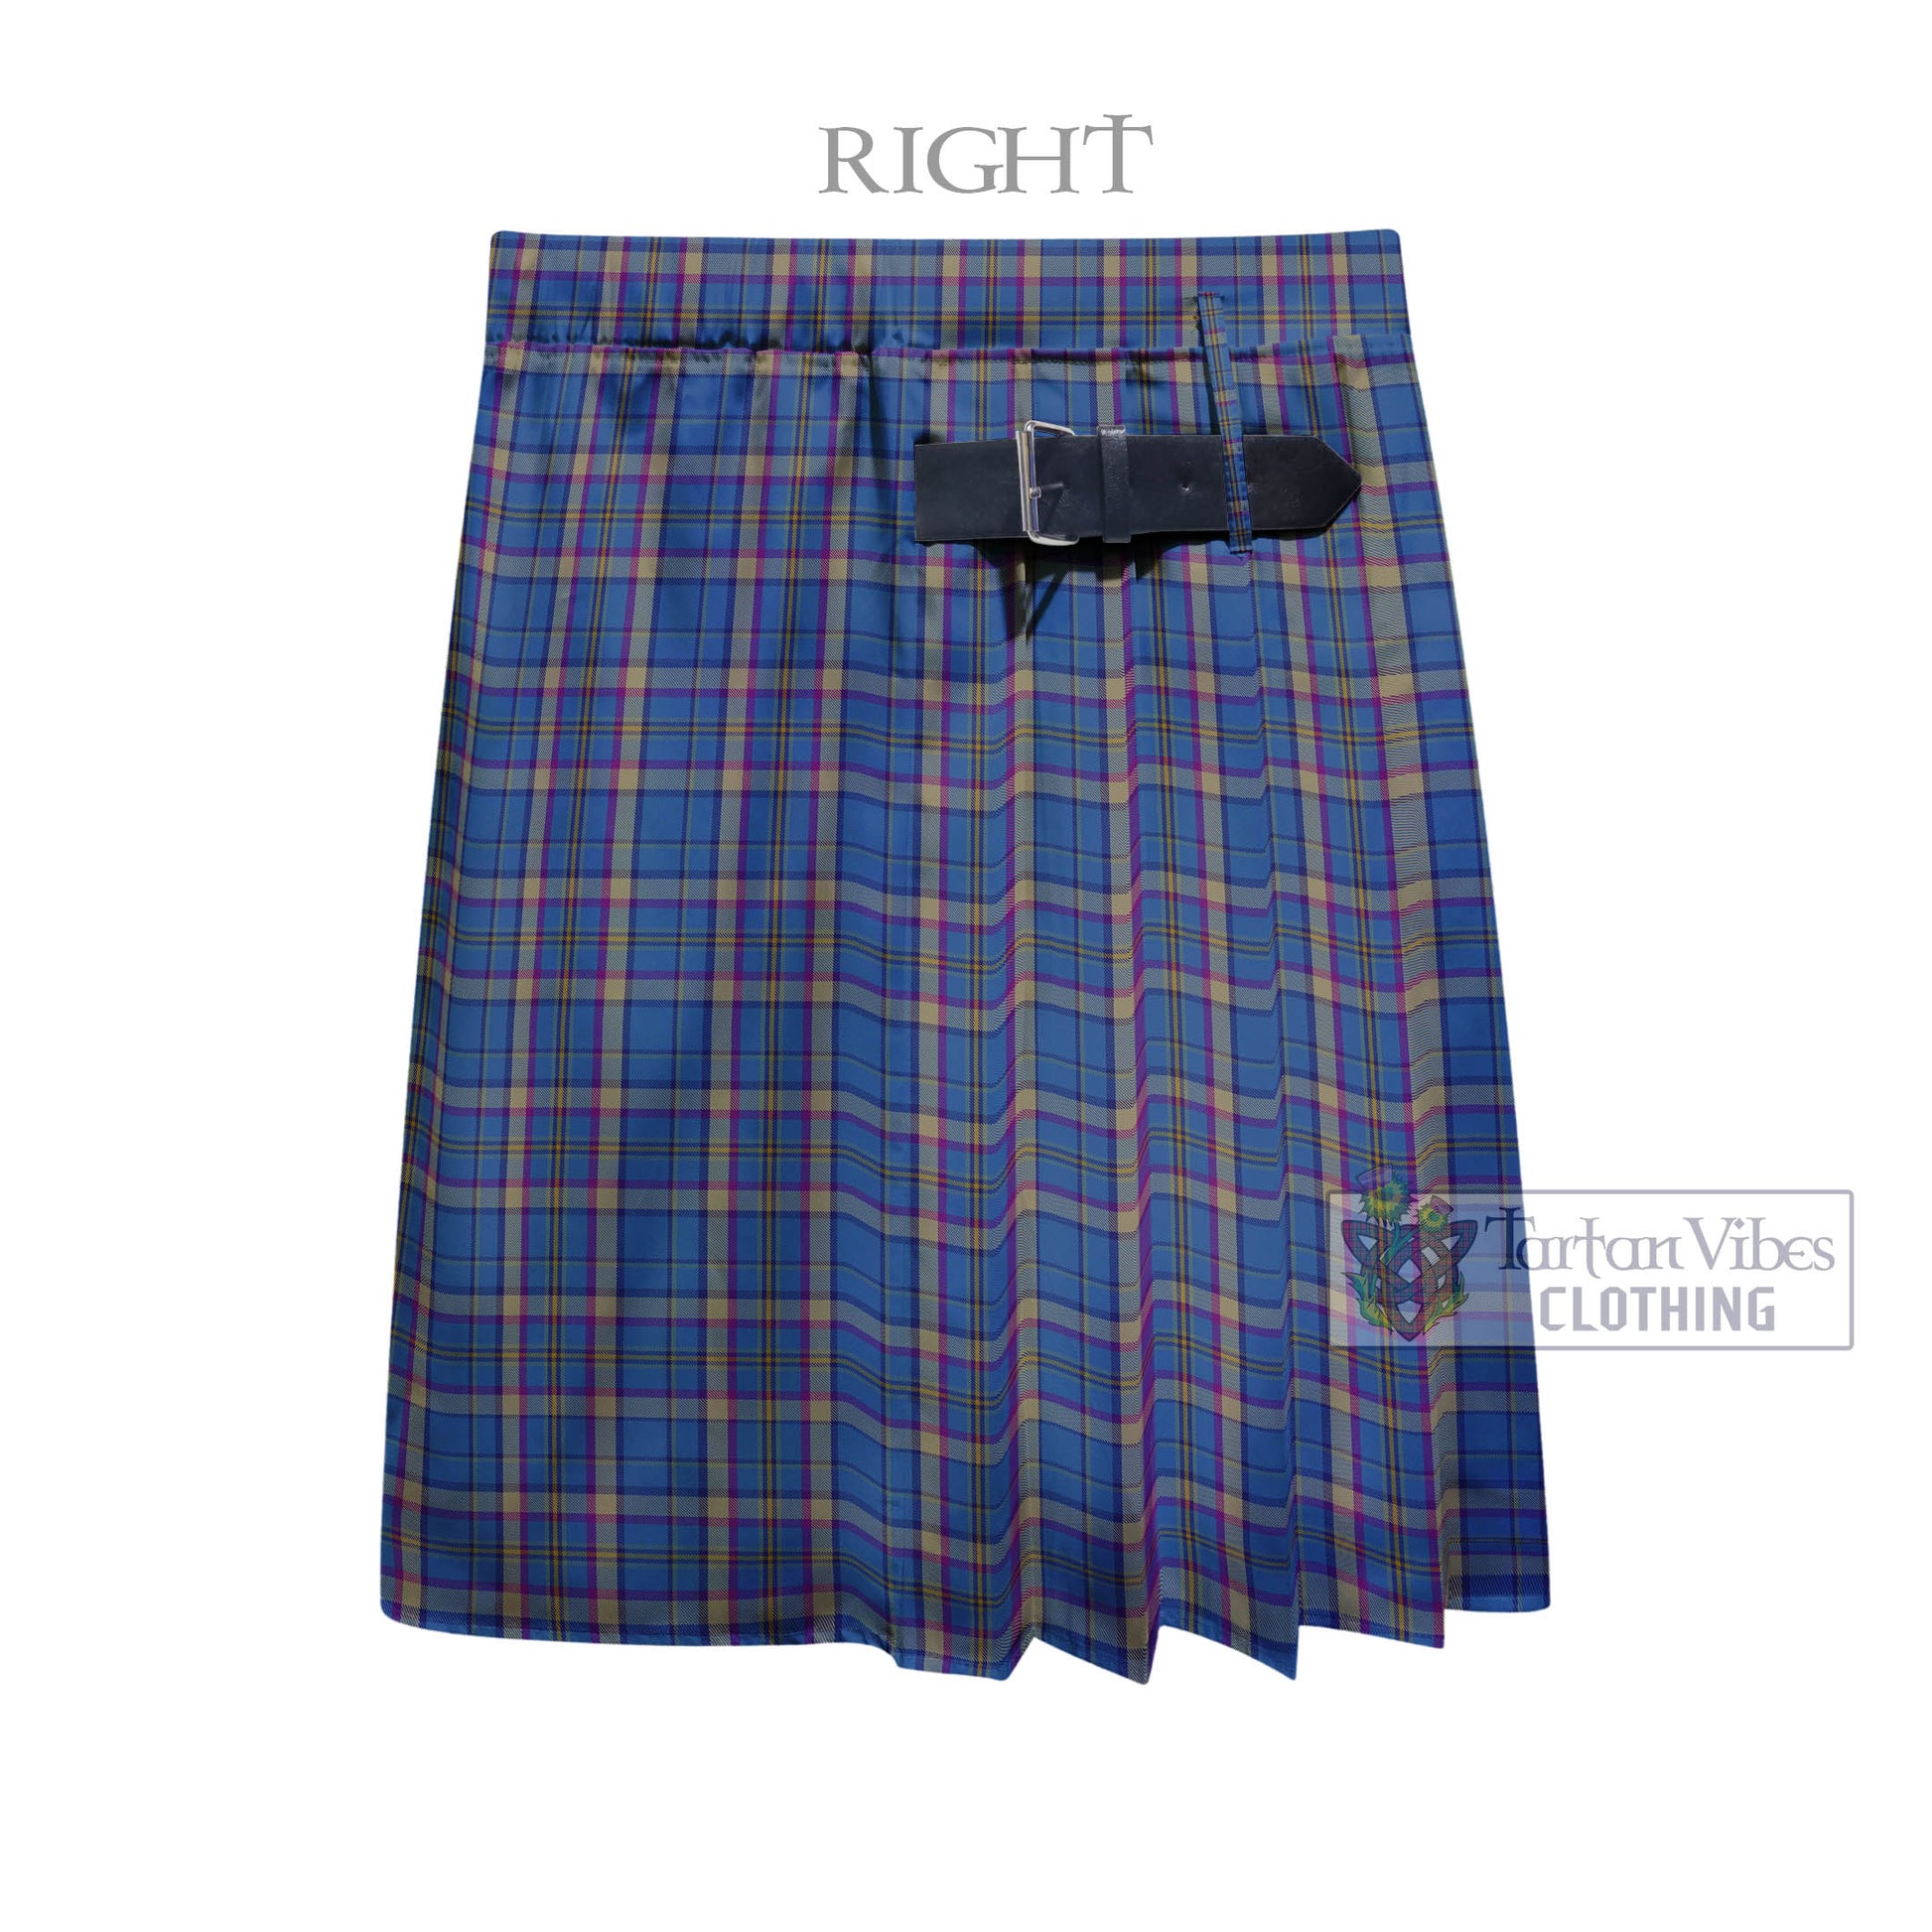 Tartan Vibes Clothing Cian Tartan Men's Pleated Skirt - Fashion Casual Retro Scottish Style